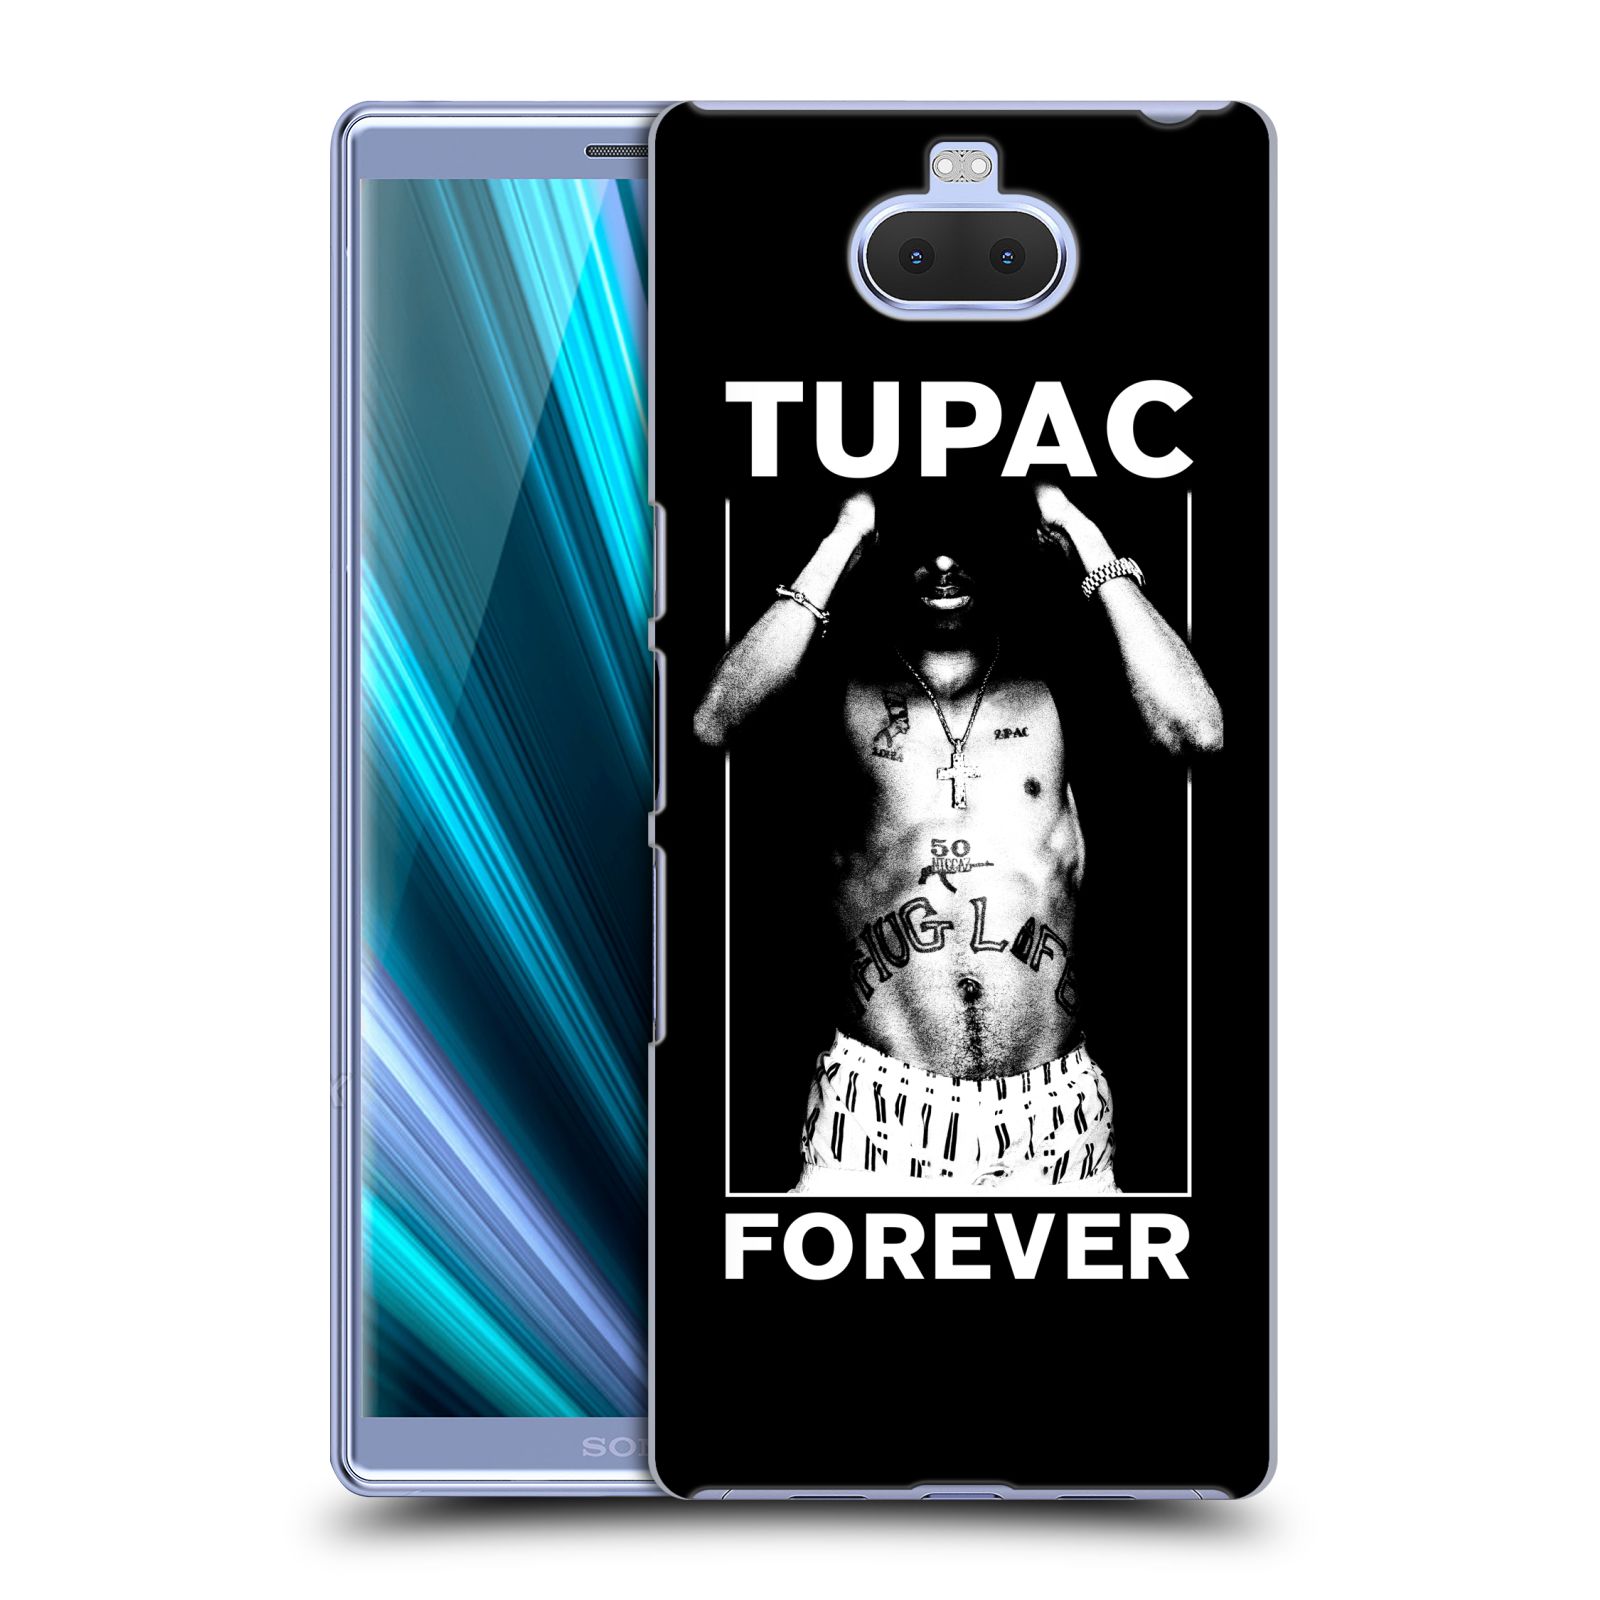 Pouzdro na mobil Sony Xperia 10 Plus - Head Case - Zpěvák rapper Tupac Shakur 2Pac bílý popisek FOREVER